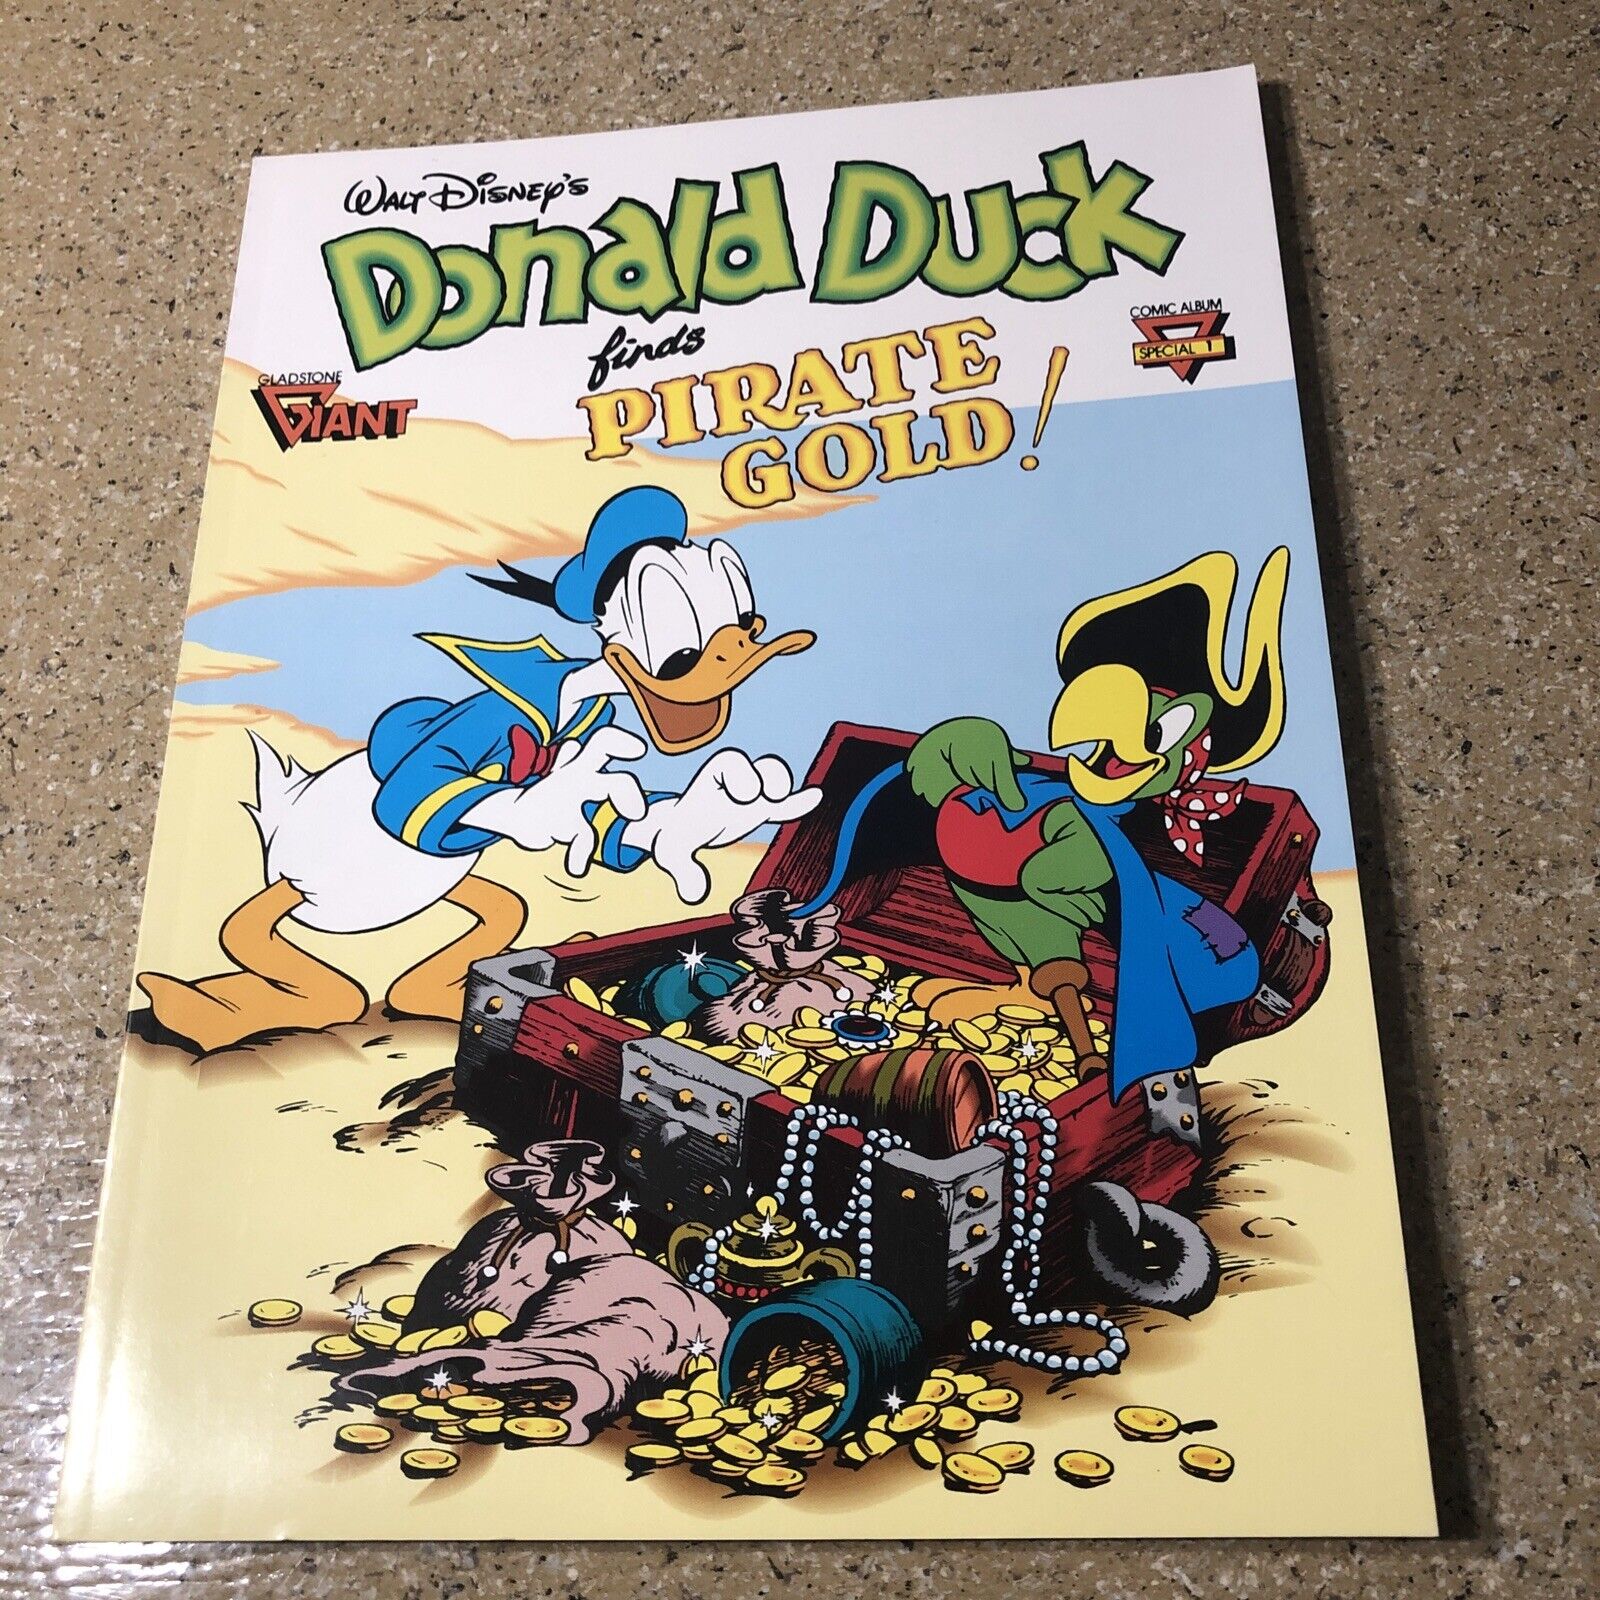 Gladstone Giant Comic Album Specil #1 Donald Duck Finds Pirate Gold.